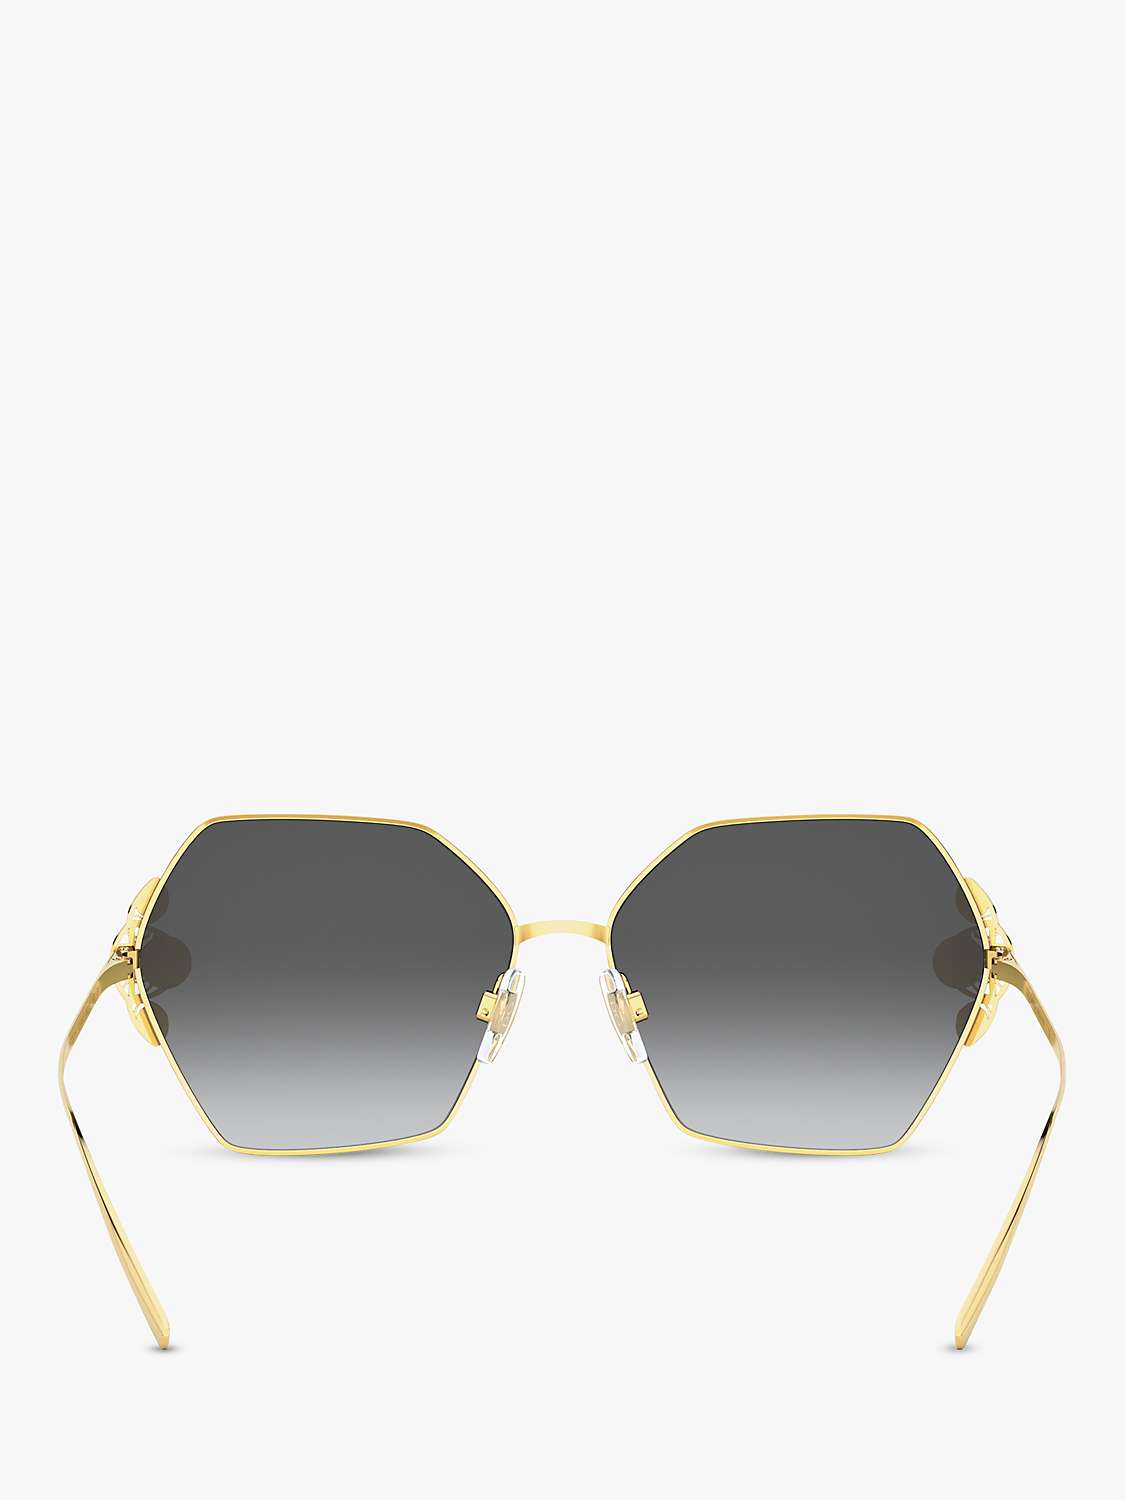 Buy Dolce & Gabbana DG2253H Women's Butterfly Sunglasses, Gold/Black Gradient Online at johnlewis.com